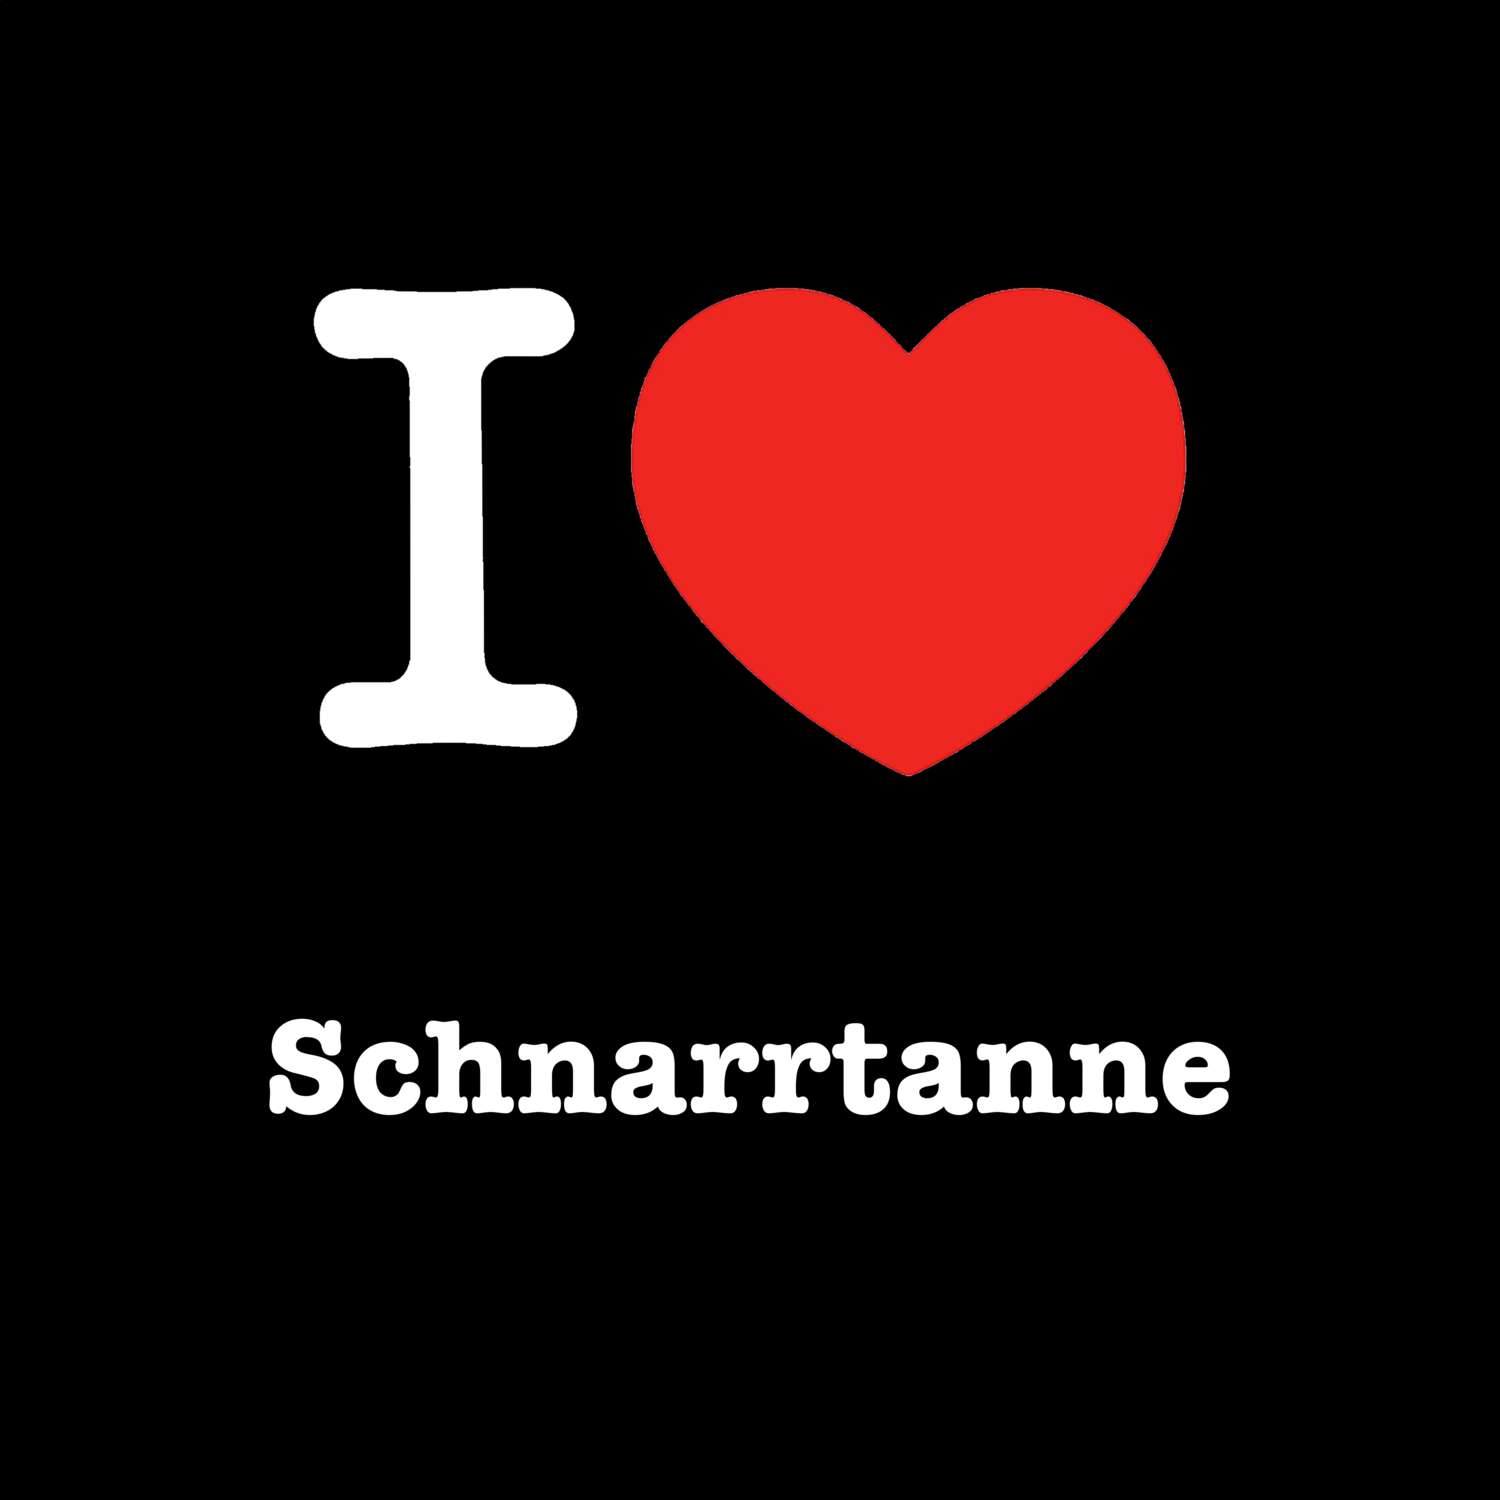 Schnarrtanne T-Shirt »I love«